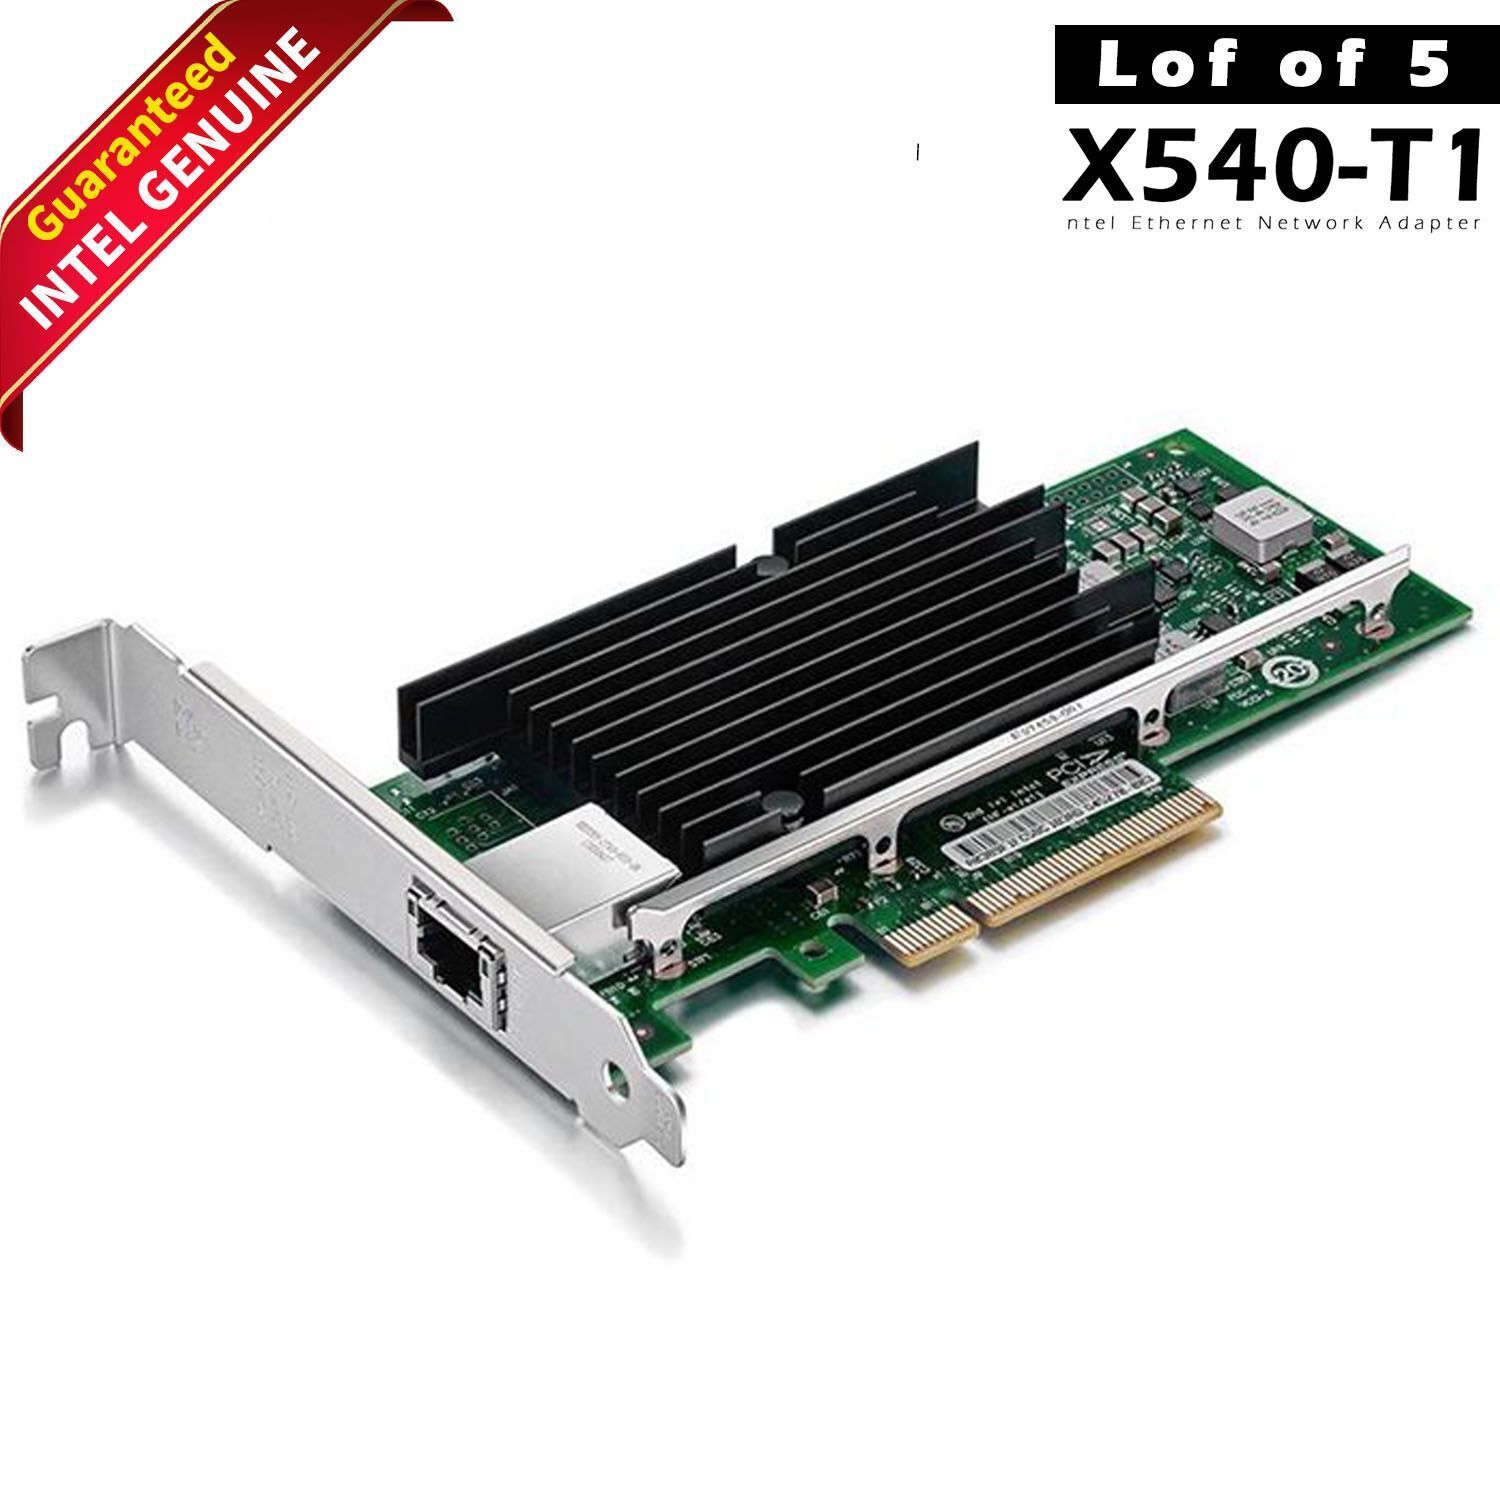 Lot X 5 Intel X540-T1 YOTTAMARK 1-Port 10GbE PCIe Ethernet Network Adapter